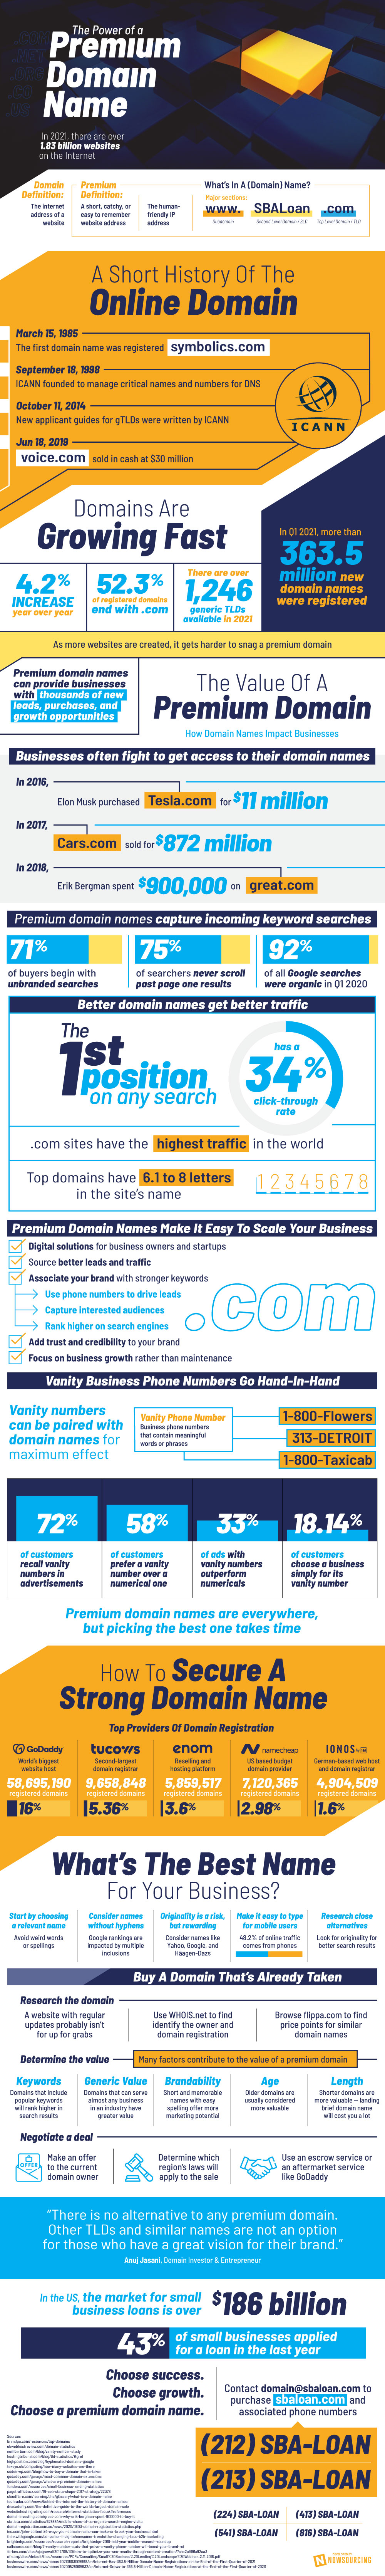 power of a premium domain name